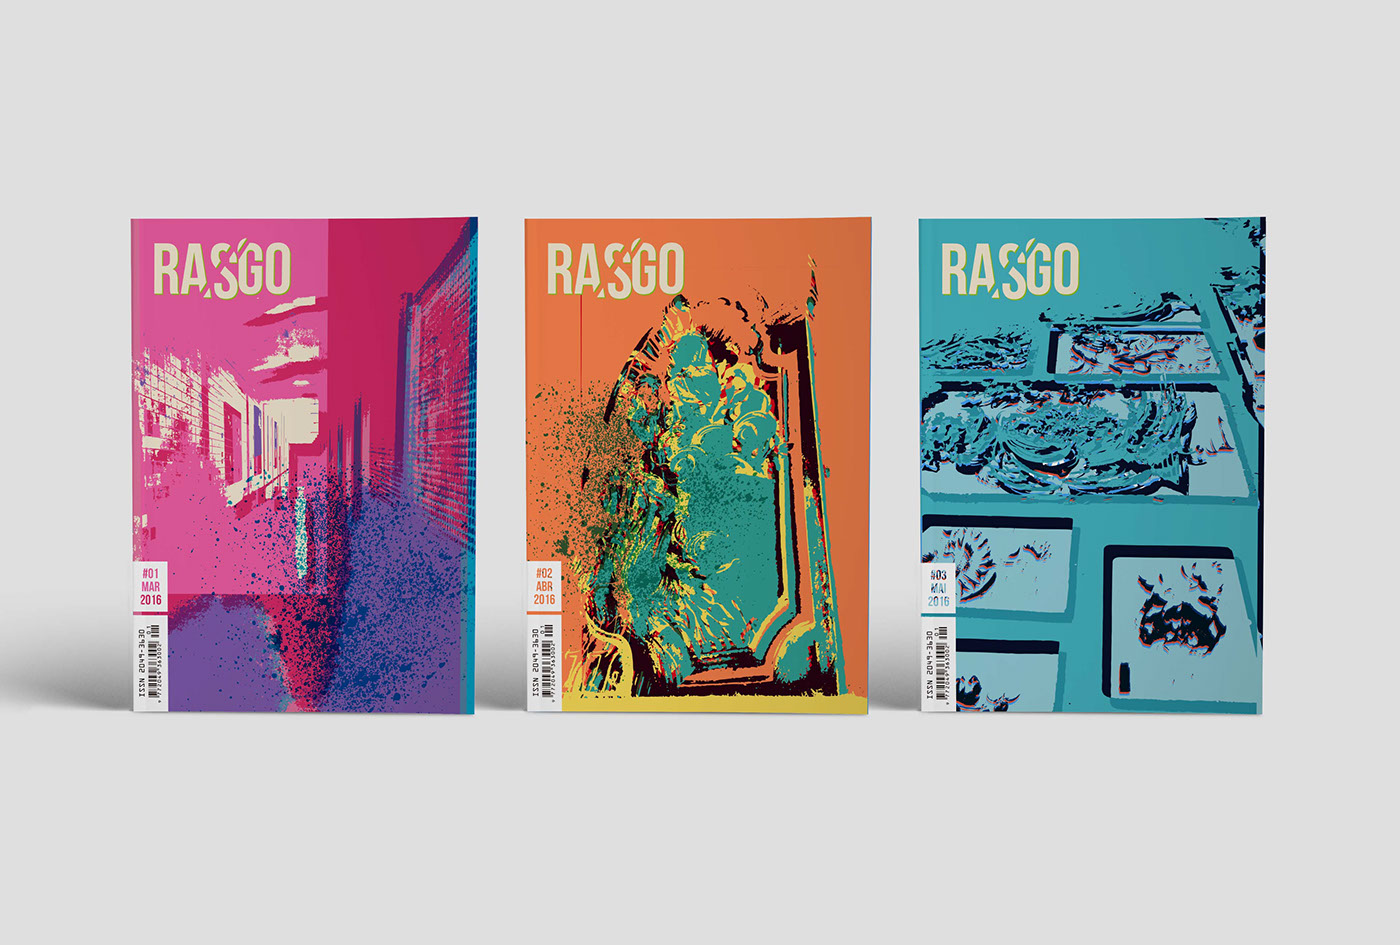 Rasgo magazine Project digital art EBA revista UFRJ projeto 200 años julie pires